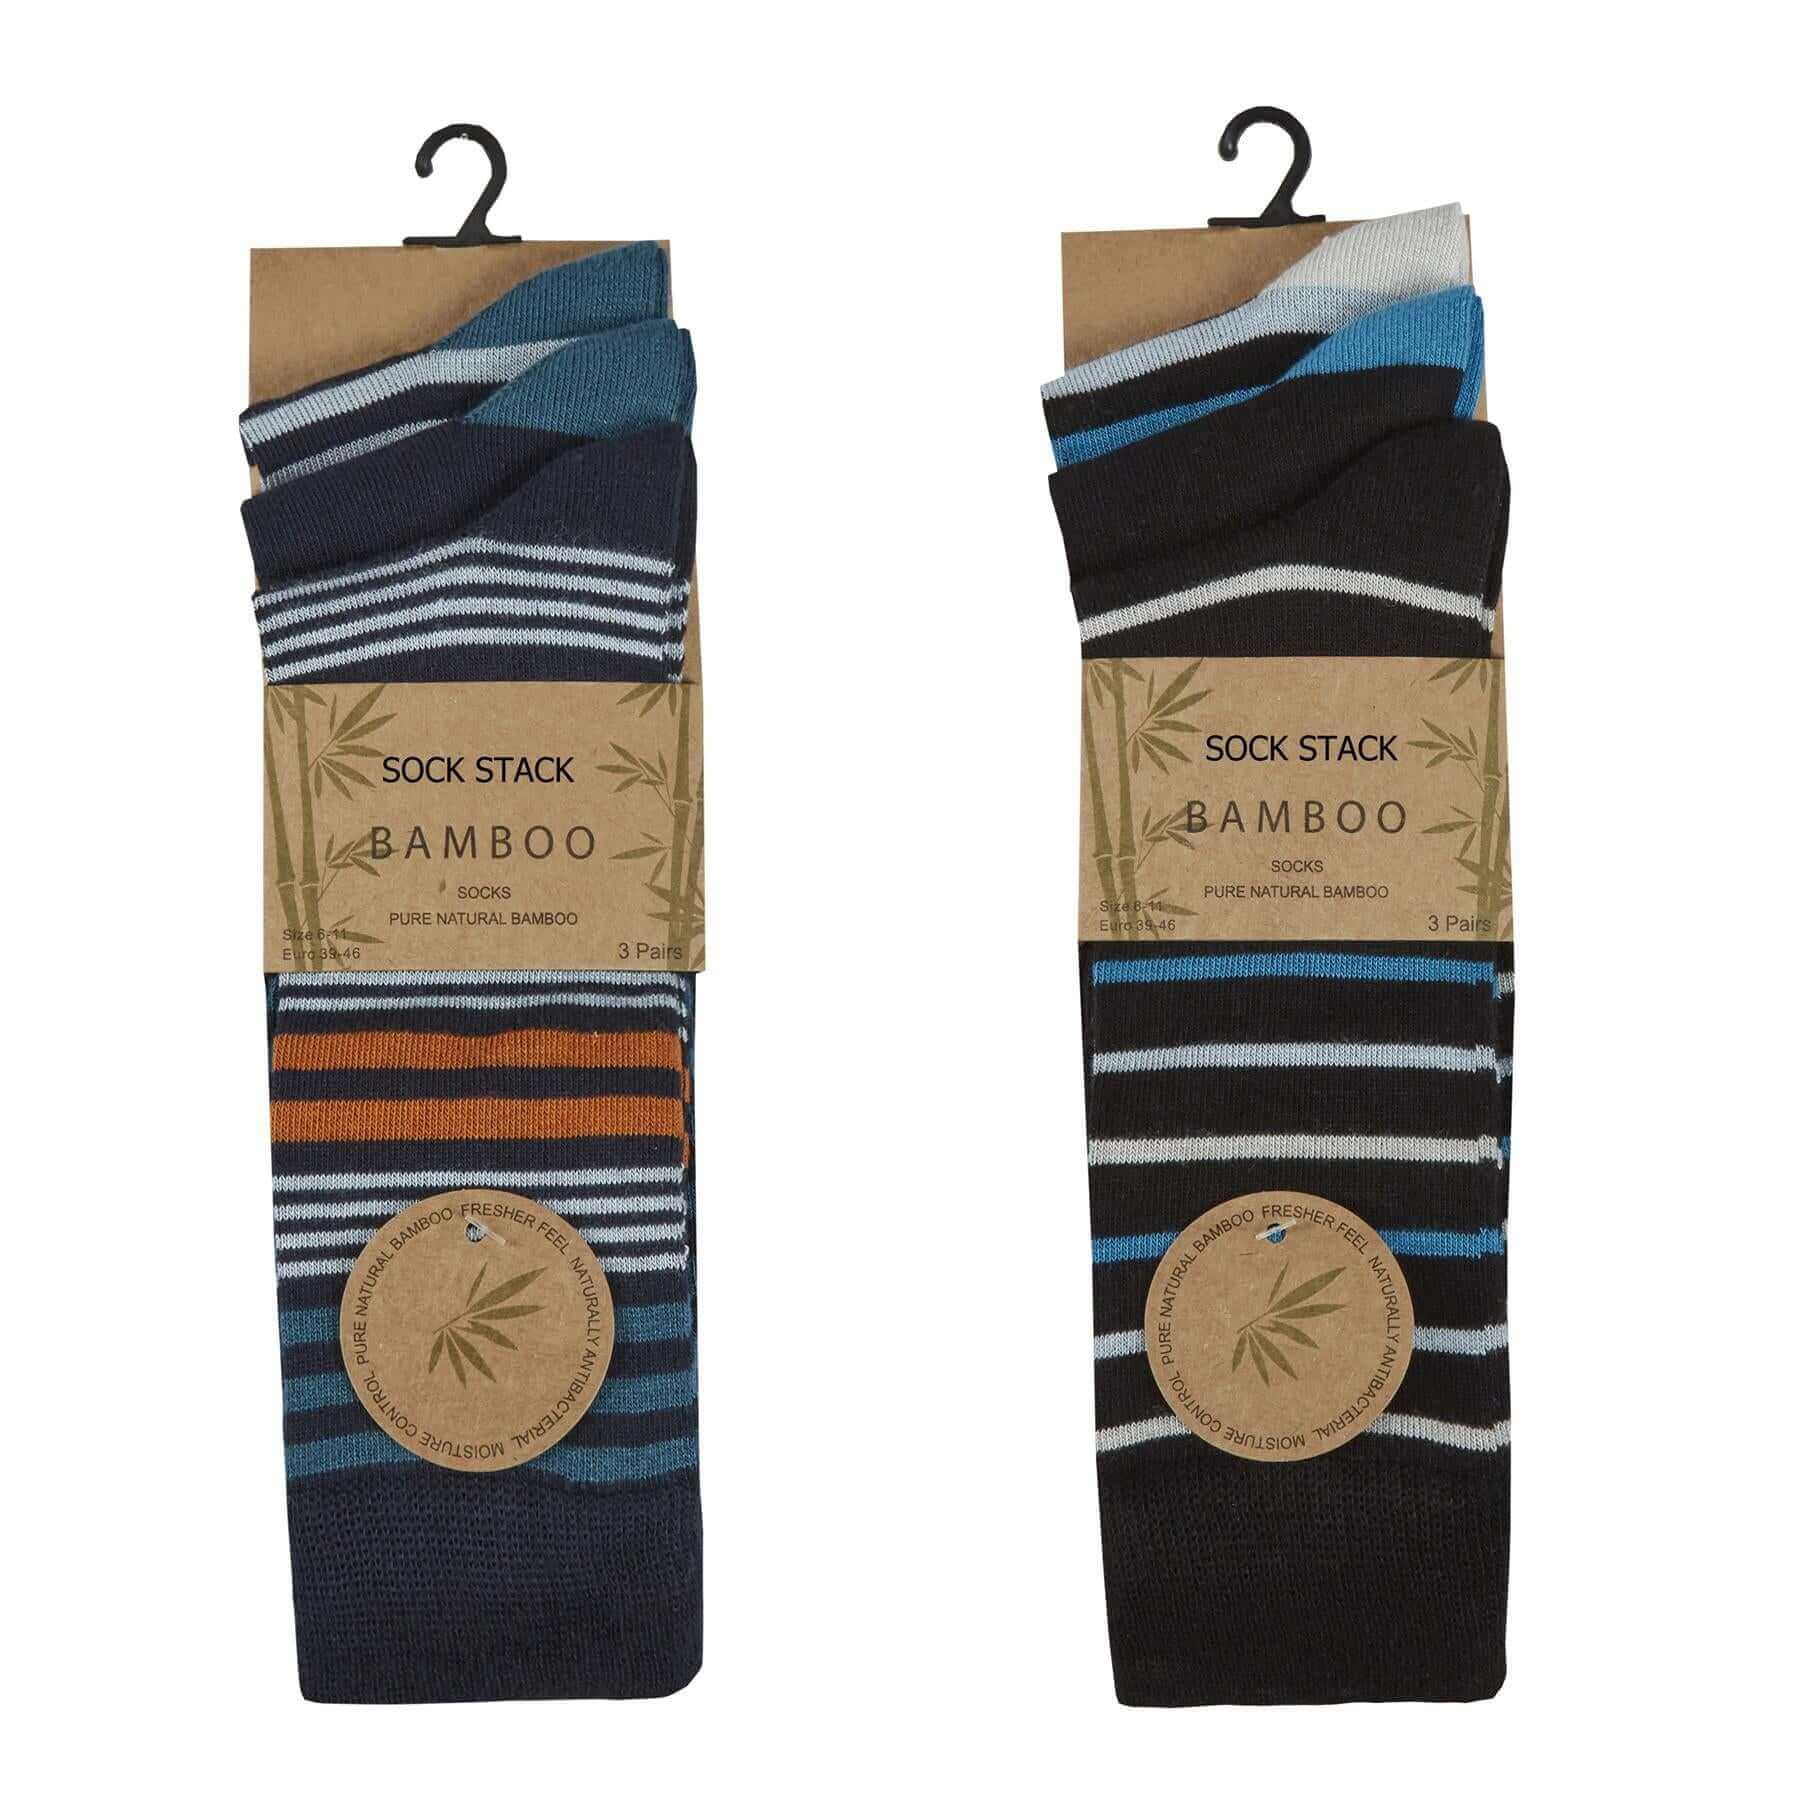 6 Pairs Of Men's Bamboo Design Socks, Argyle Stripe Suit Casual Sock. Buy now for £8.00. A Socks by Sock Stack. 6-11, anti bacterial, argyle, argyle diamond, assorted, athletics, bamboo, black, boot socks, boys socks, breathable, comfortable, dress socks,